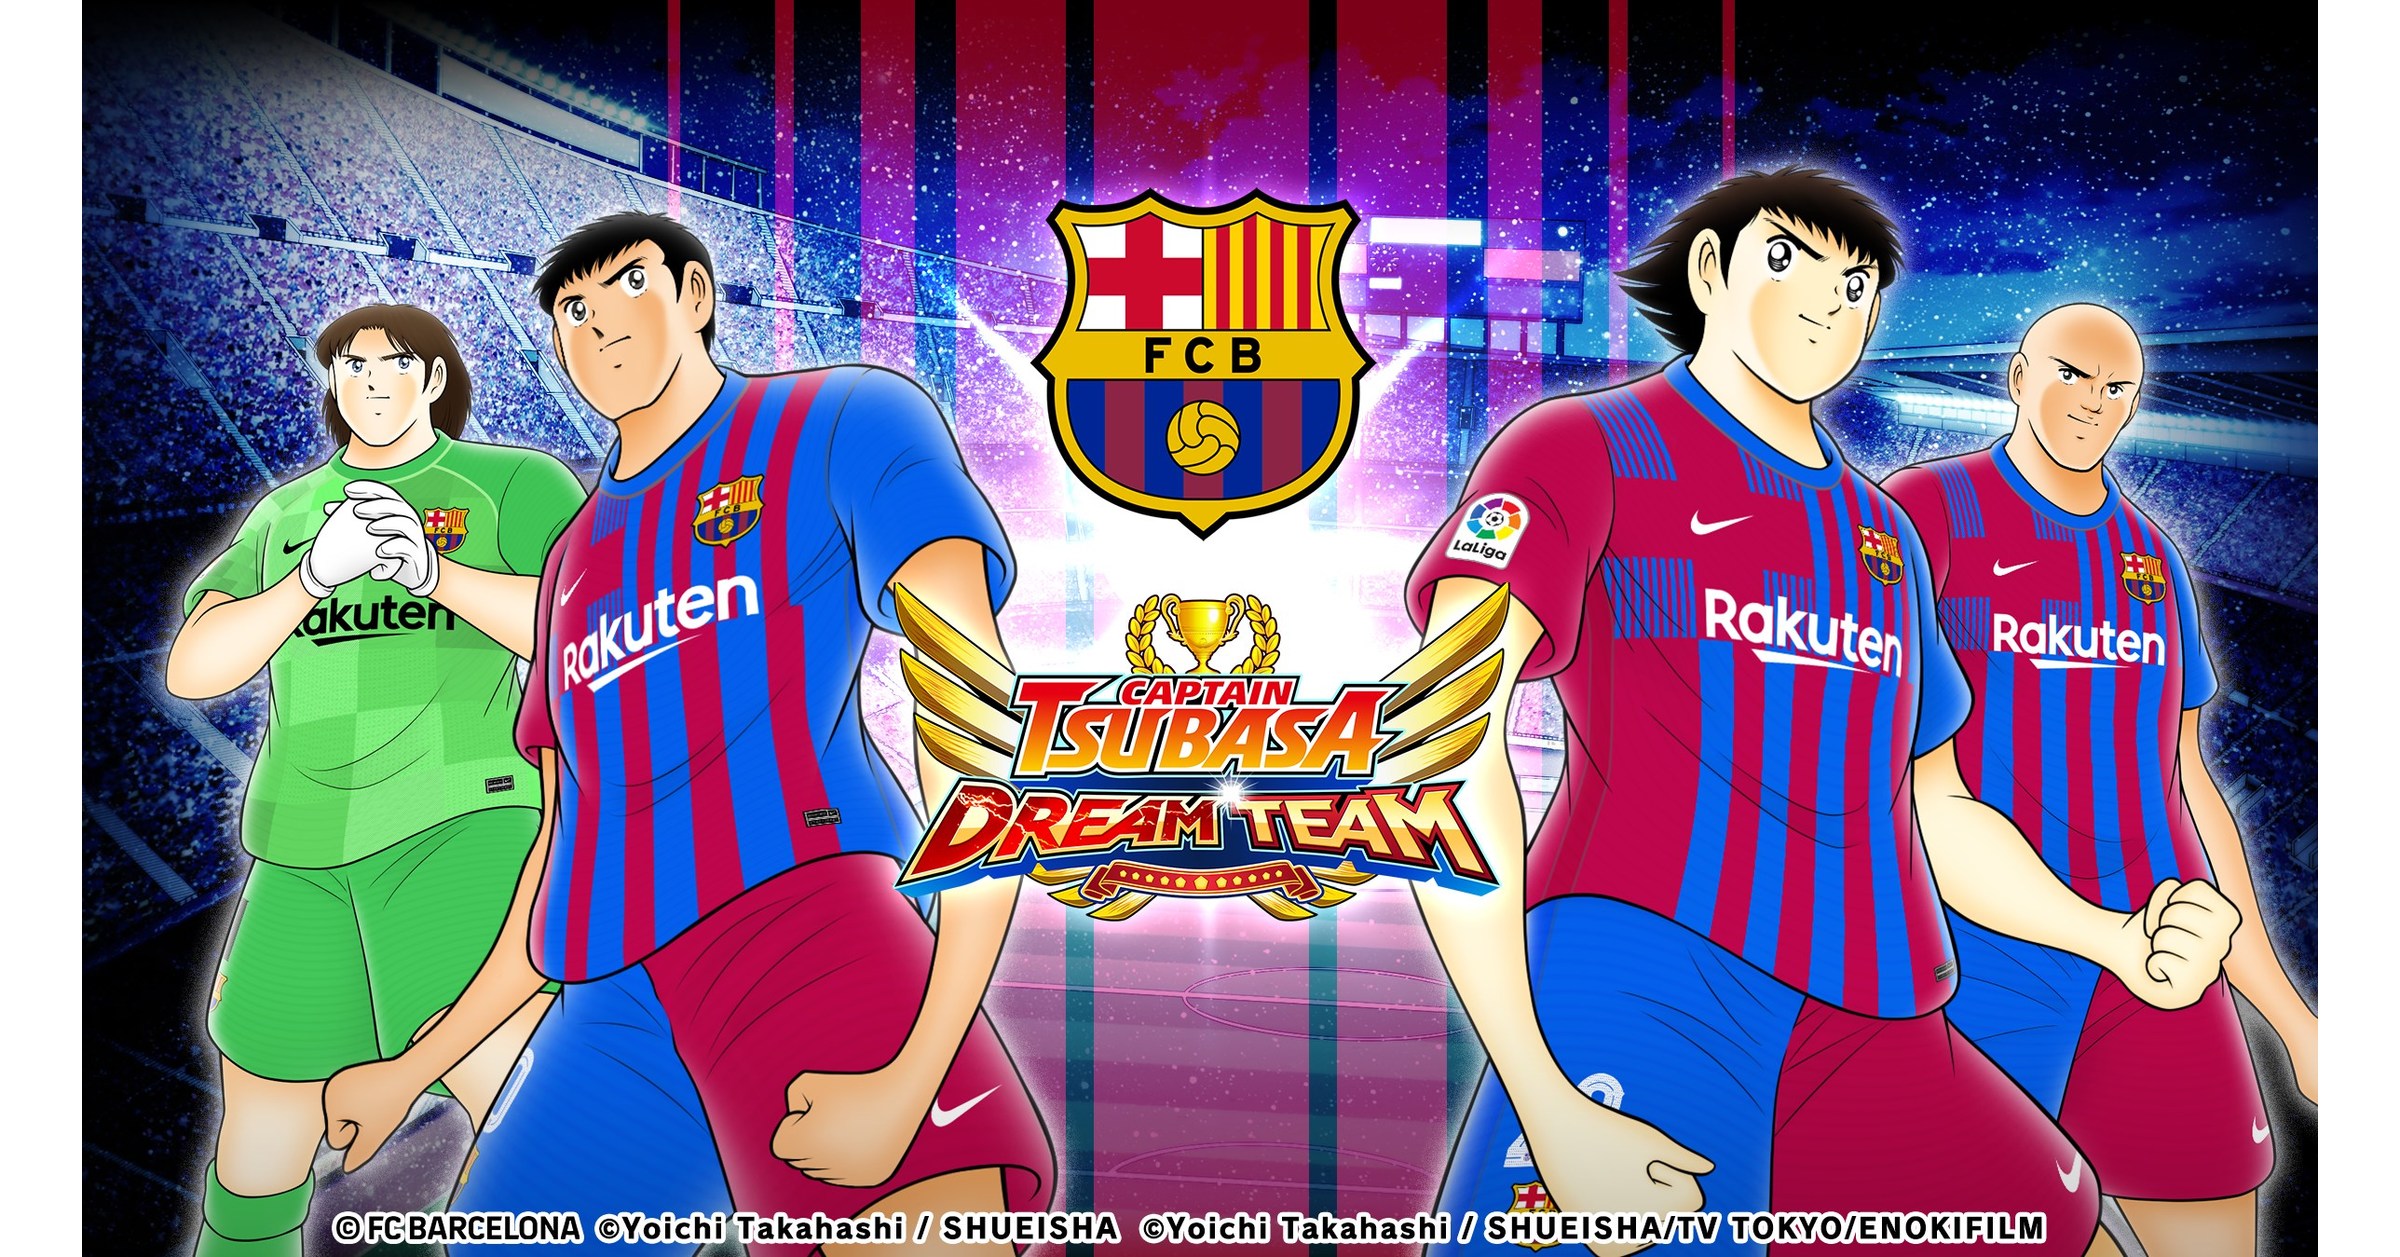 Captain Tsubasa Dream Team Worldwide 4th Anniversary Official Fc Barcelona Uniforms Debut In Game